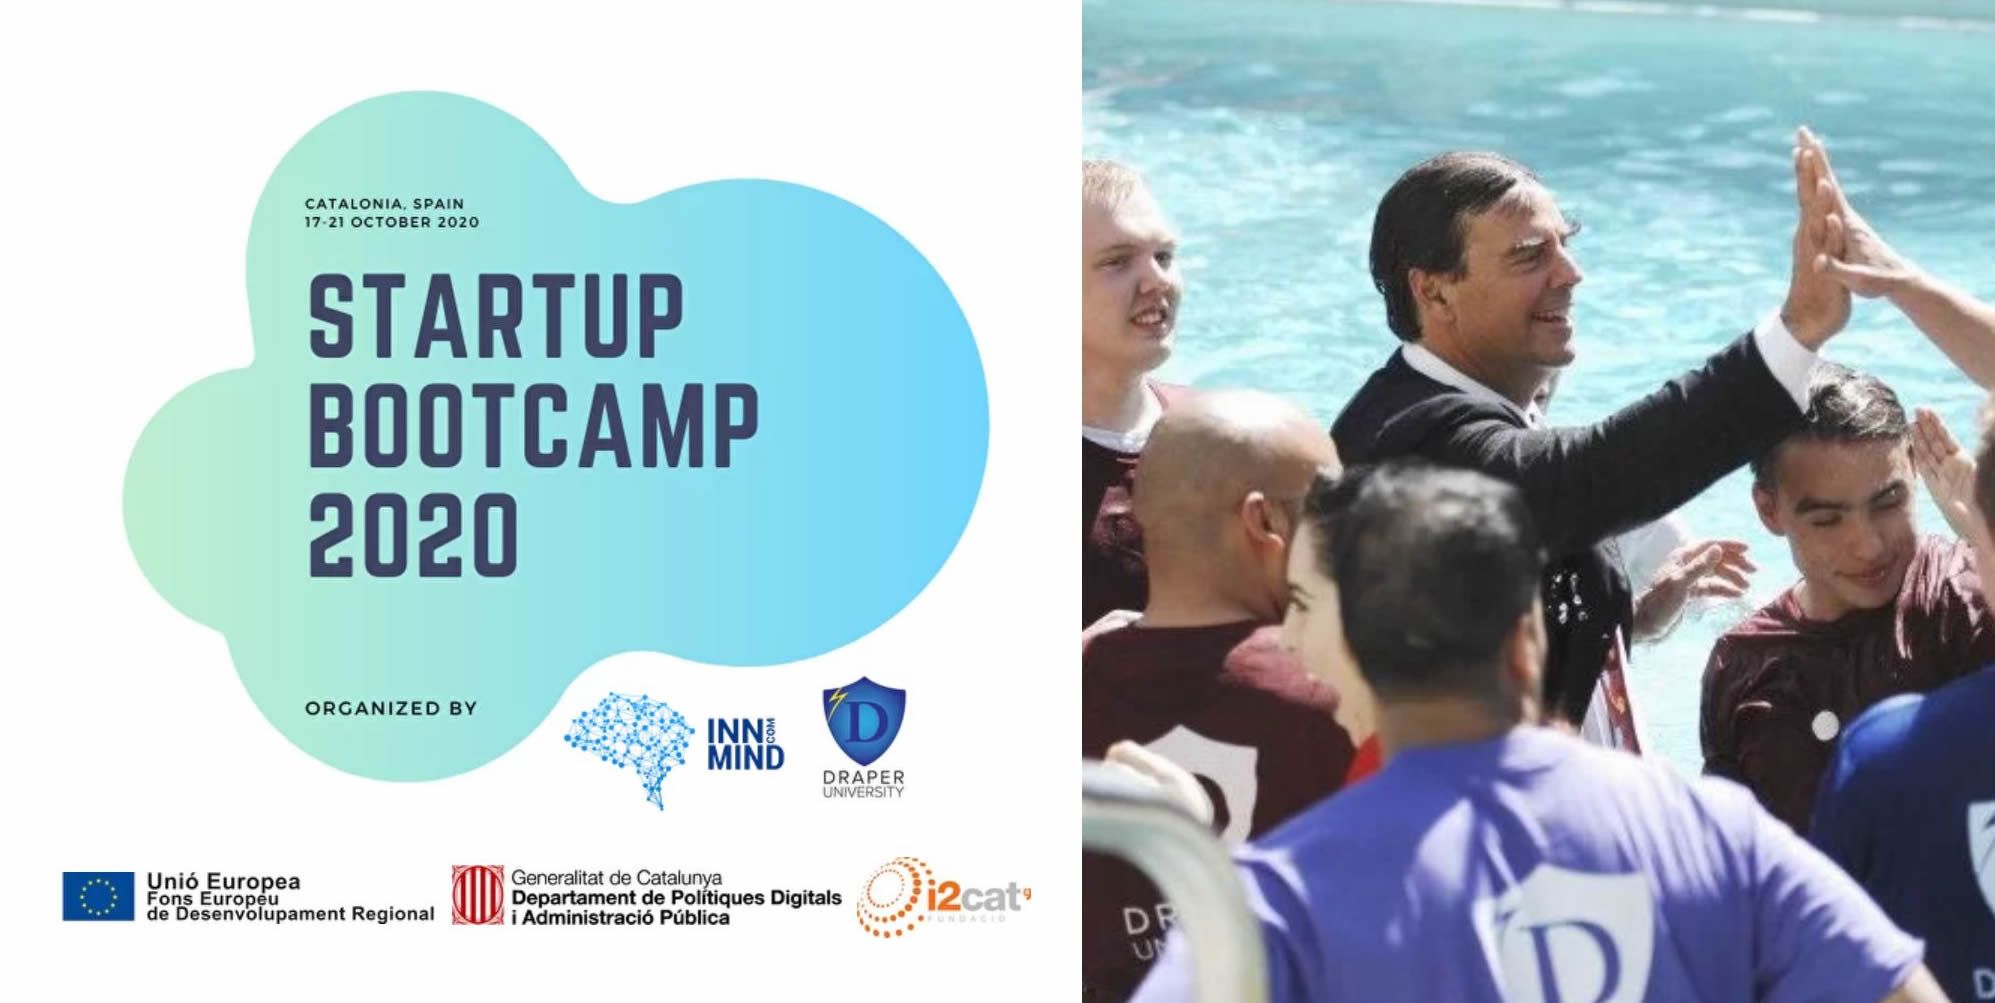 innmind - Startup Bootcamp 2020 - 17-21 October, 2020 Catalonia, Spain